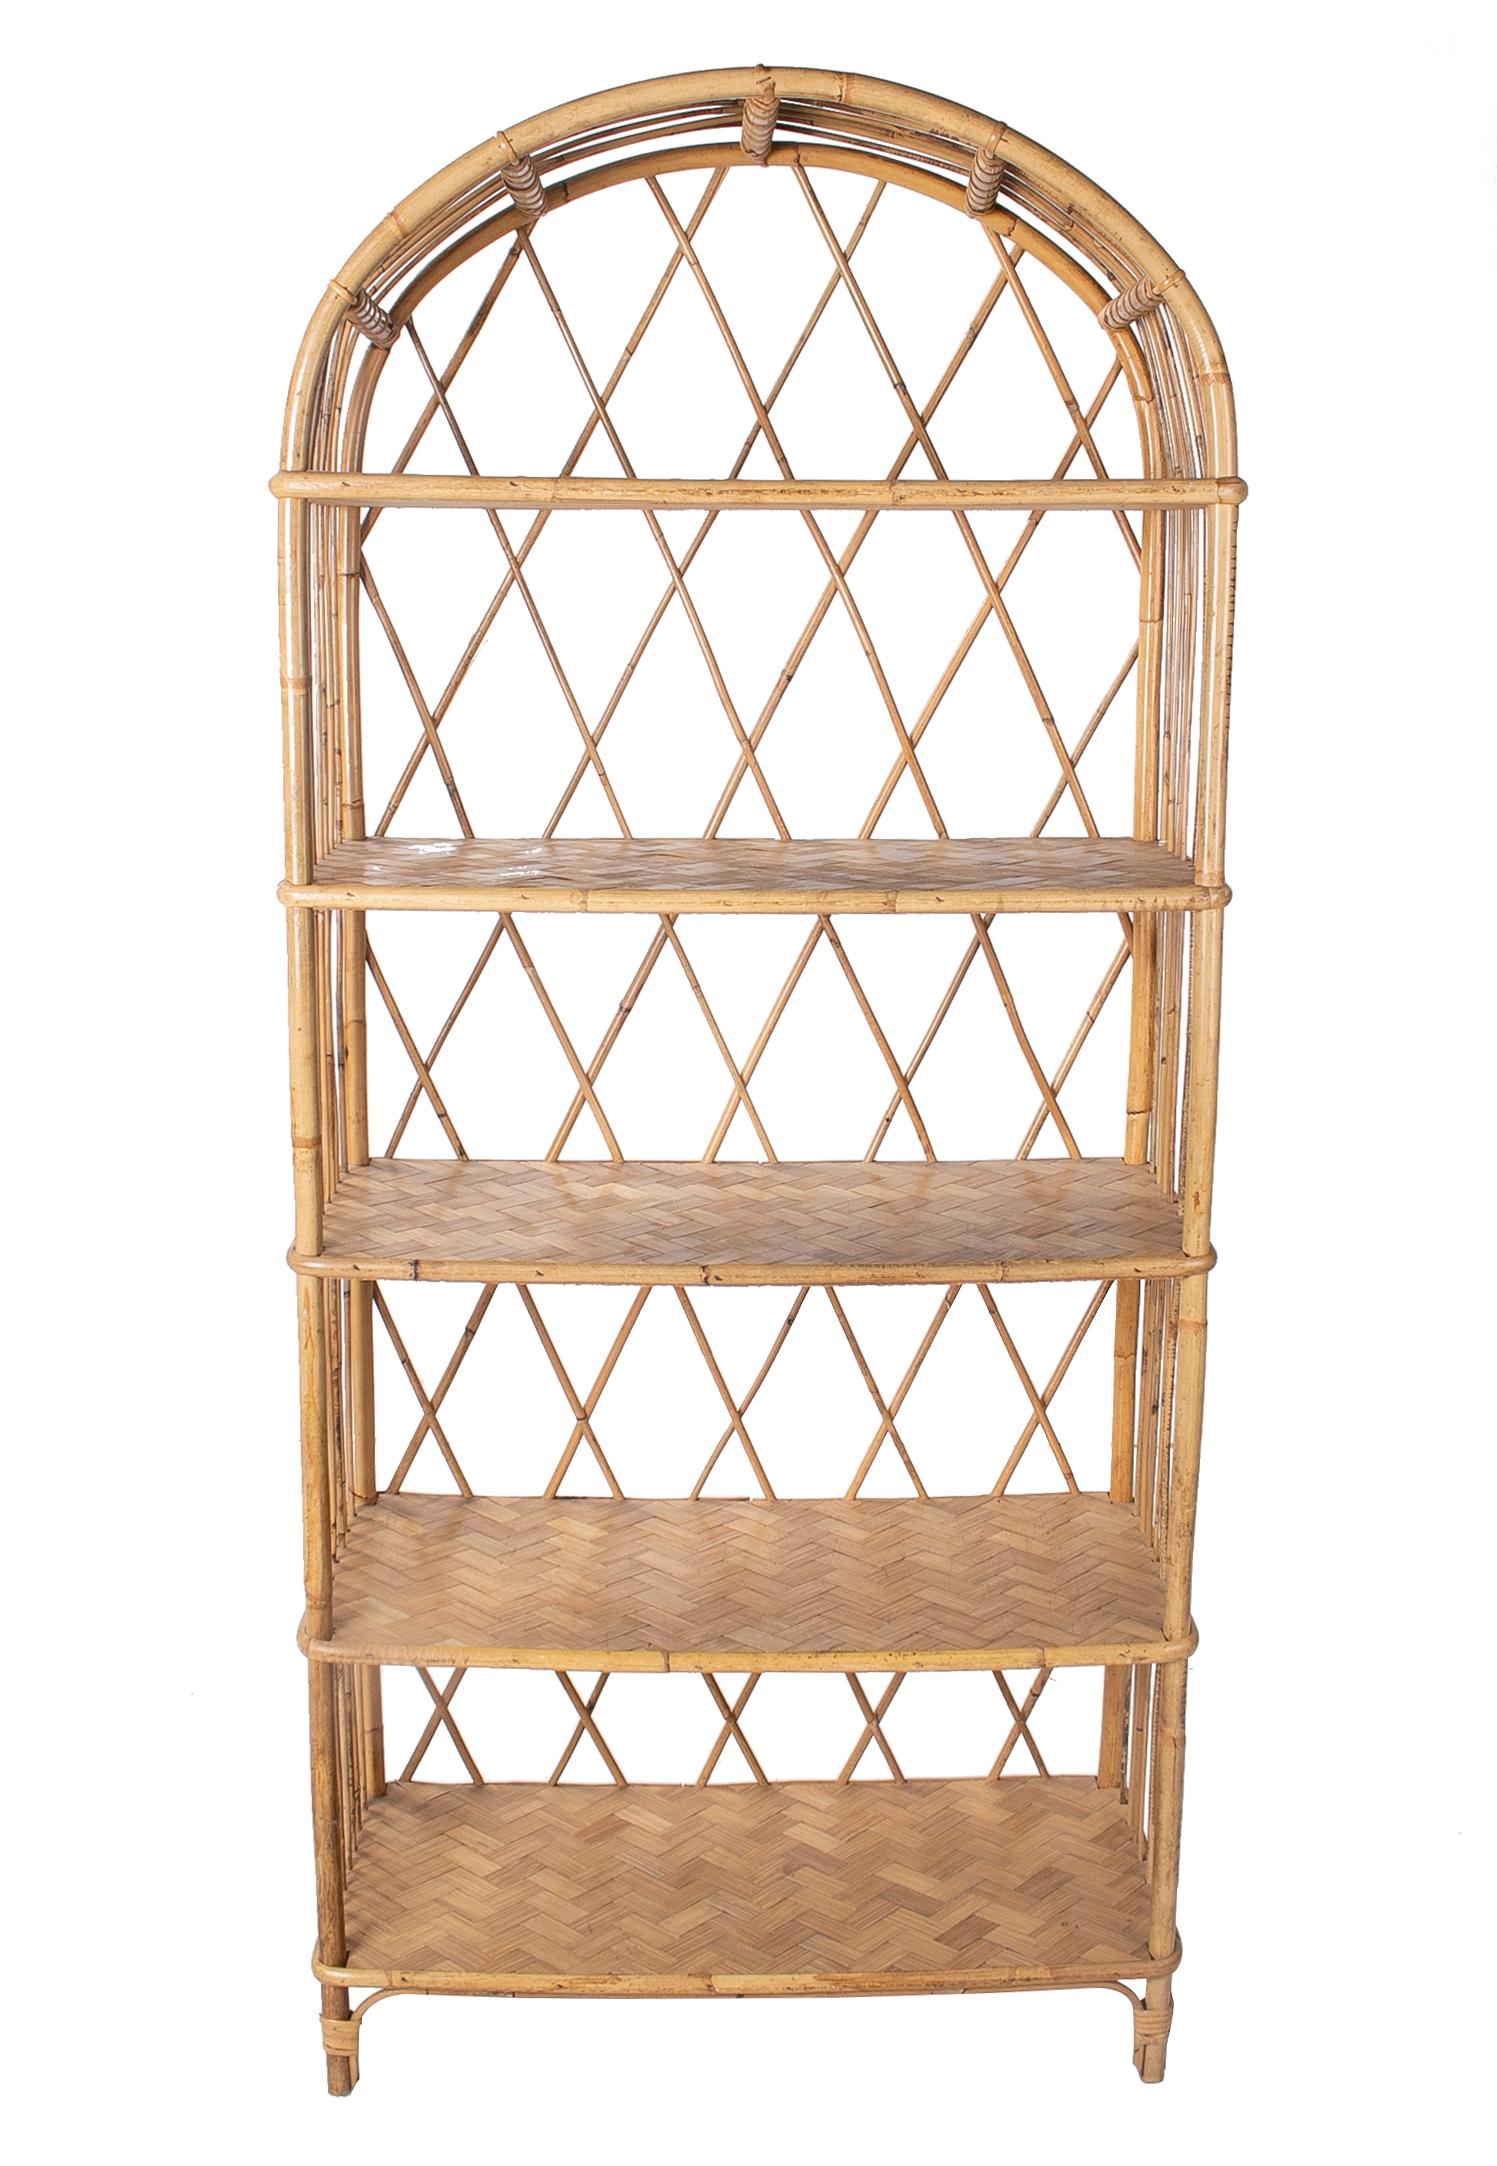 1980s Spanish woven wicker four rack shelf.